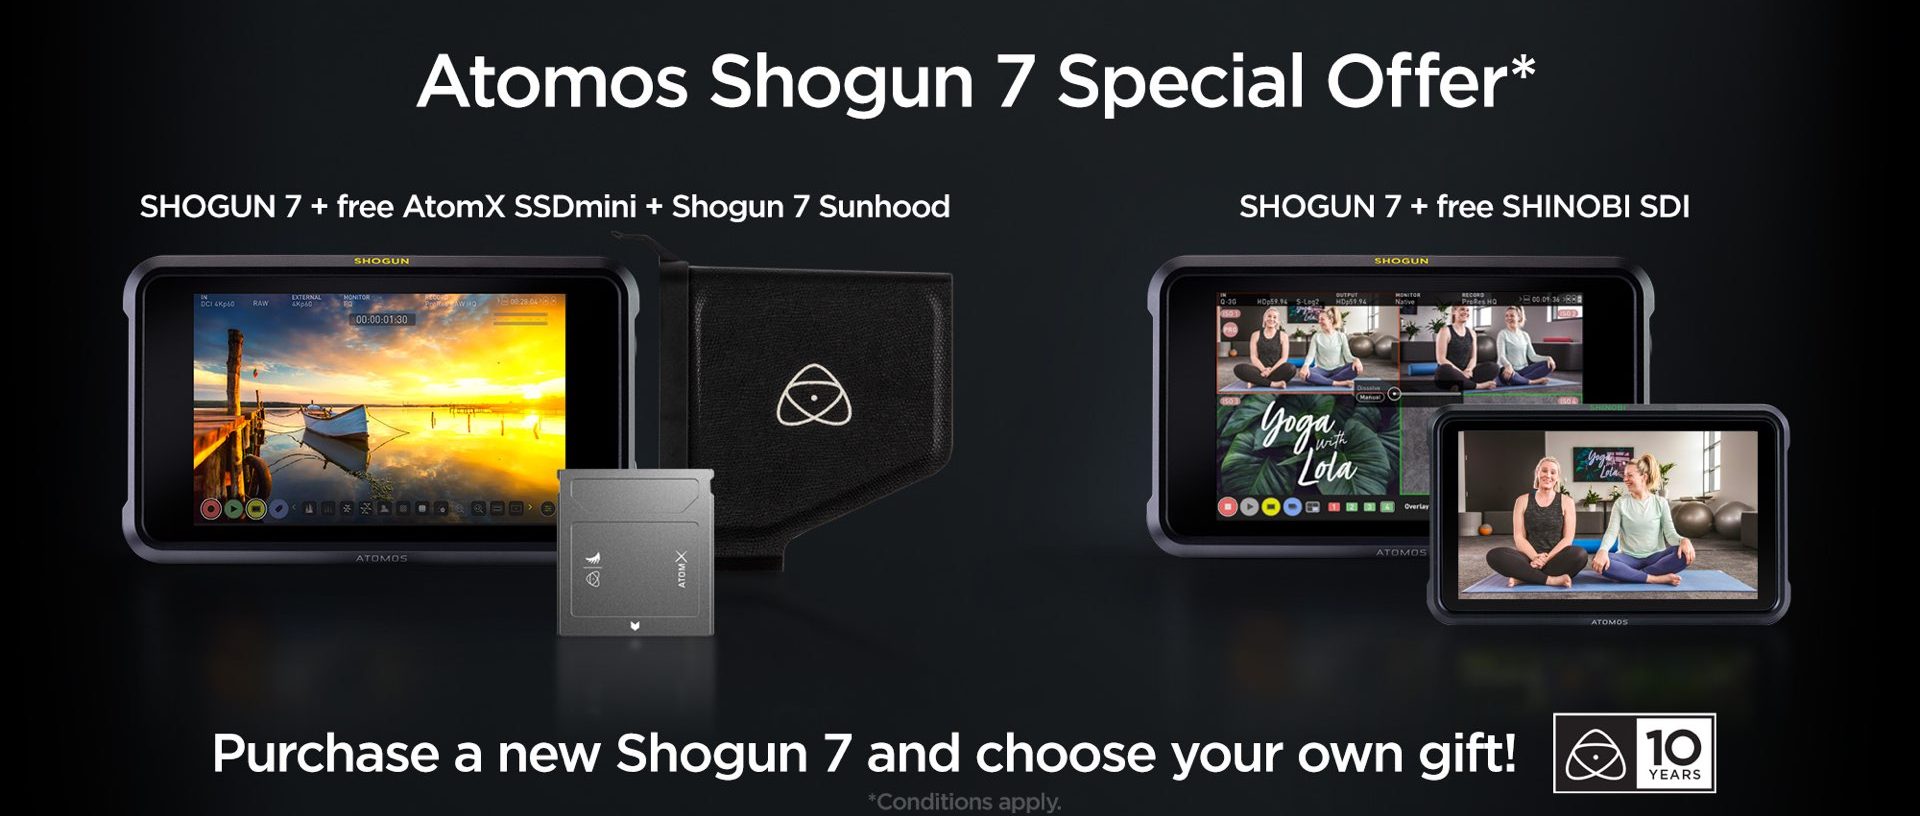 Shogun 7 special offer. Picture: Atomos